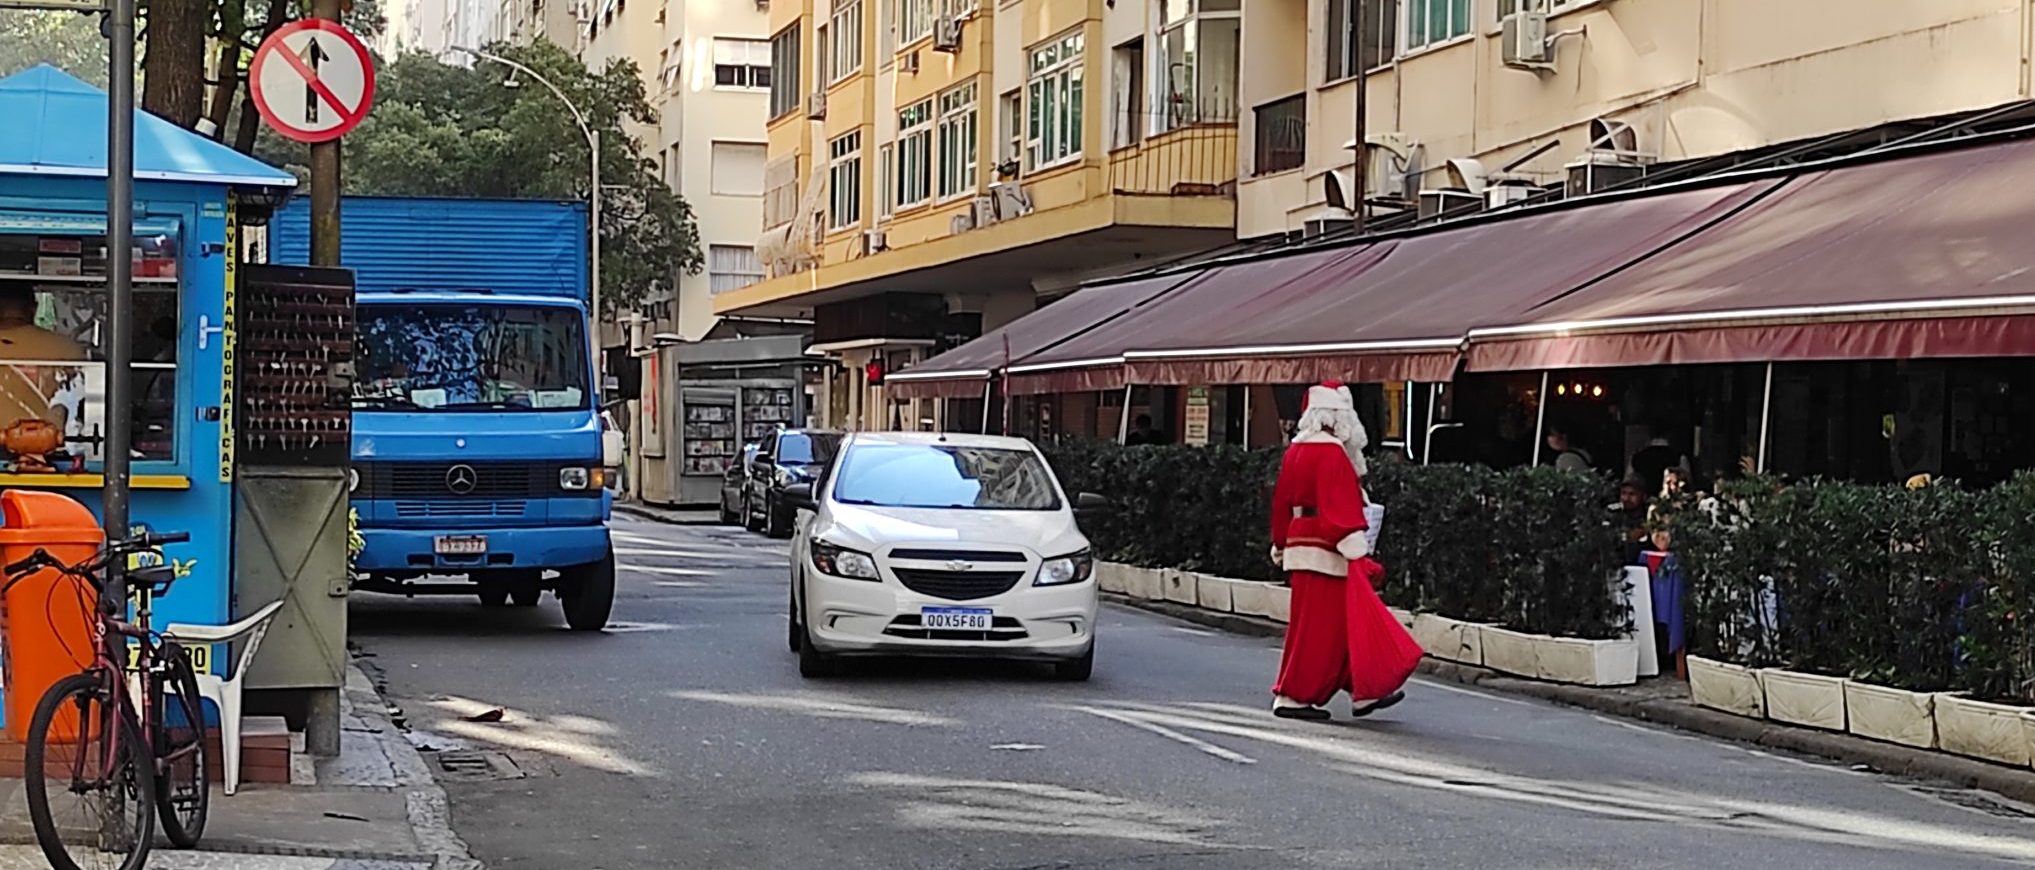 Papai Noel atravessa a rua